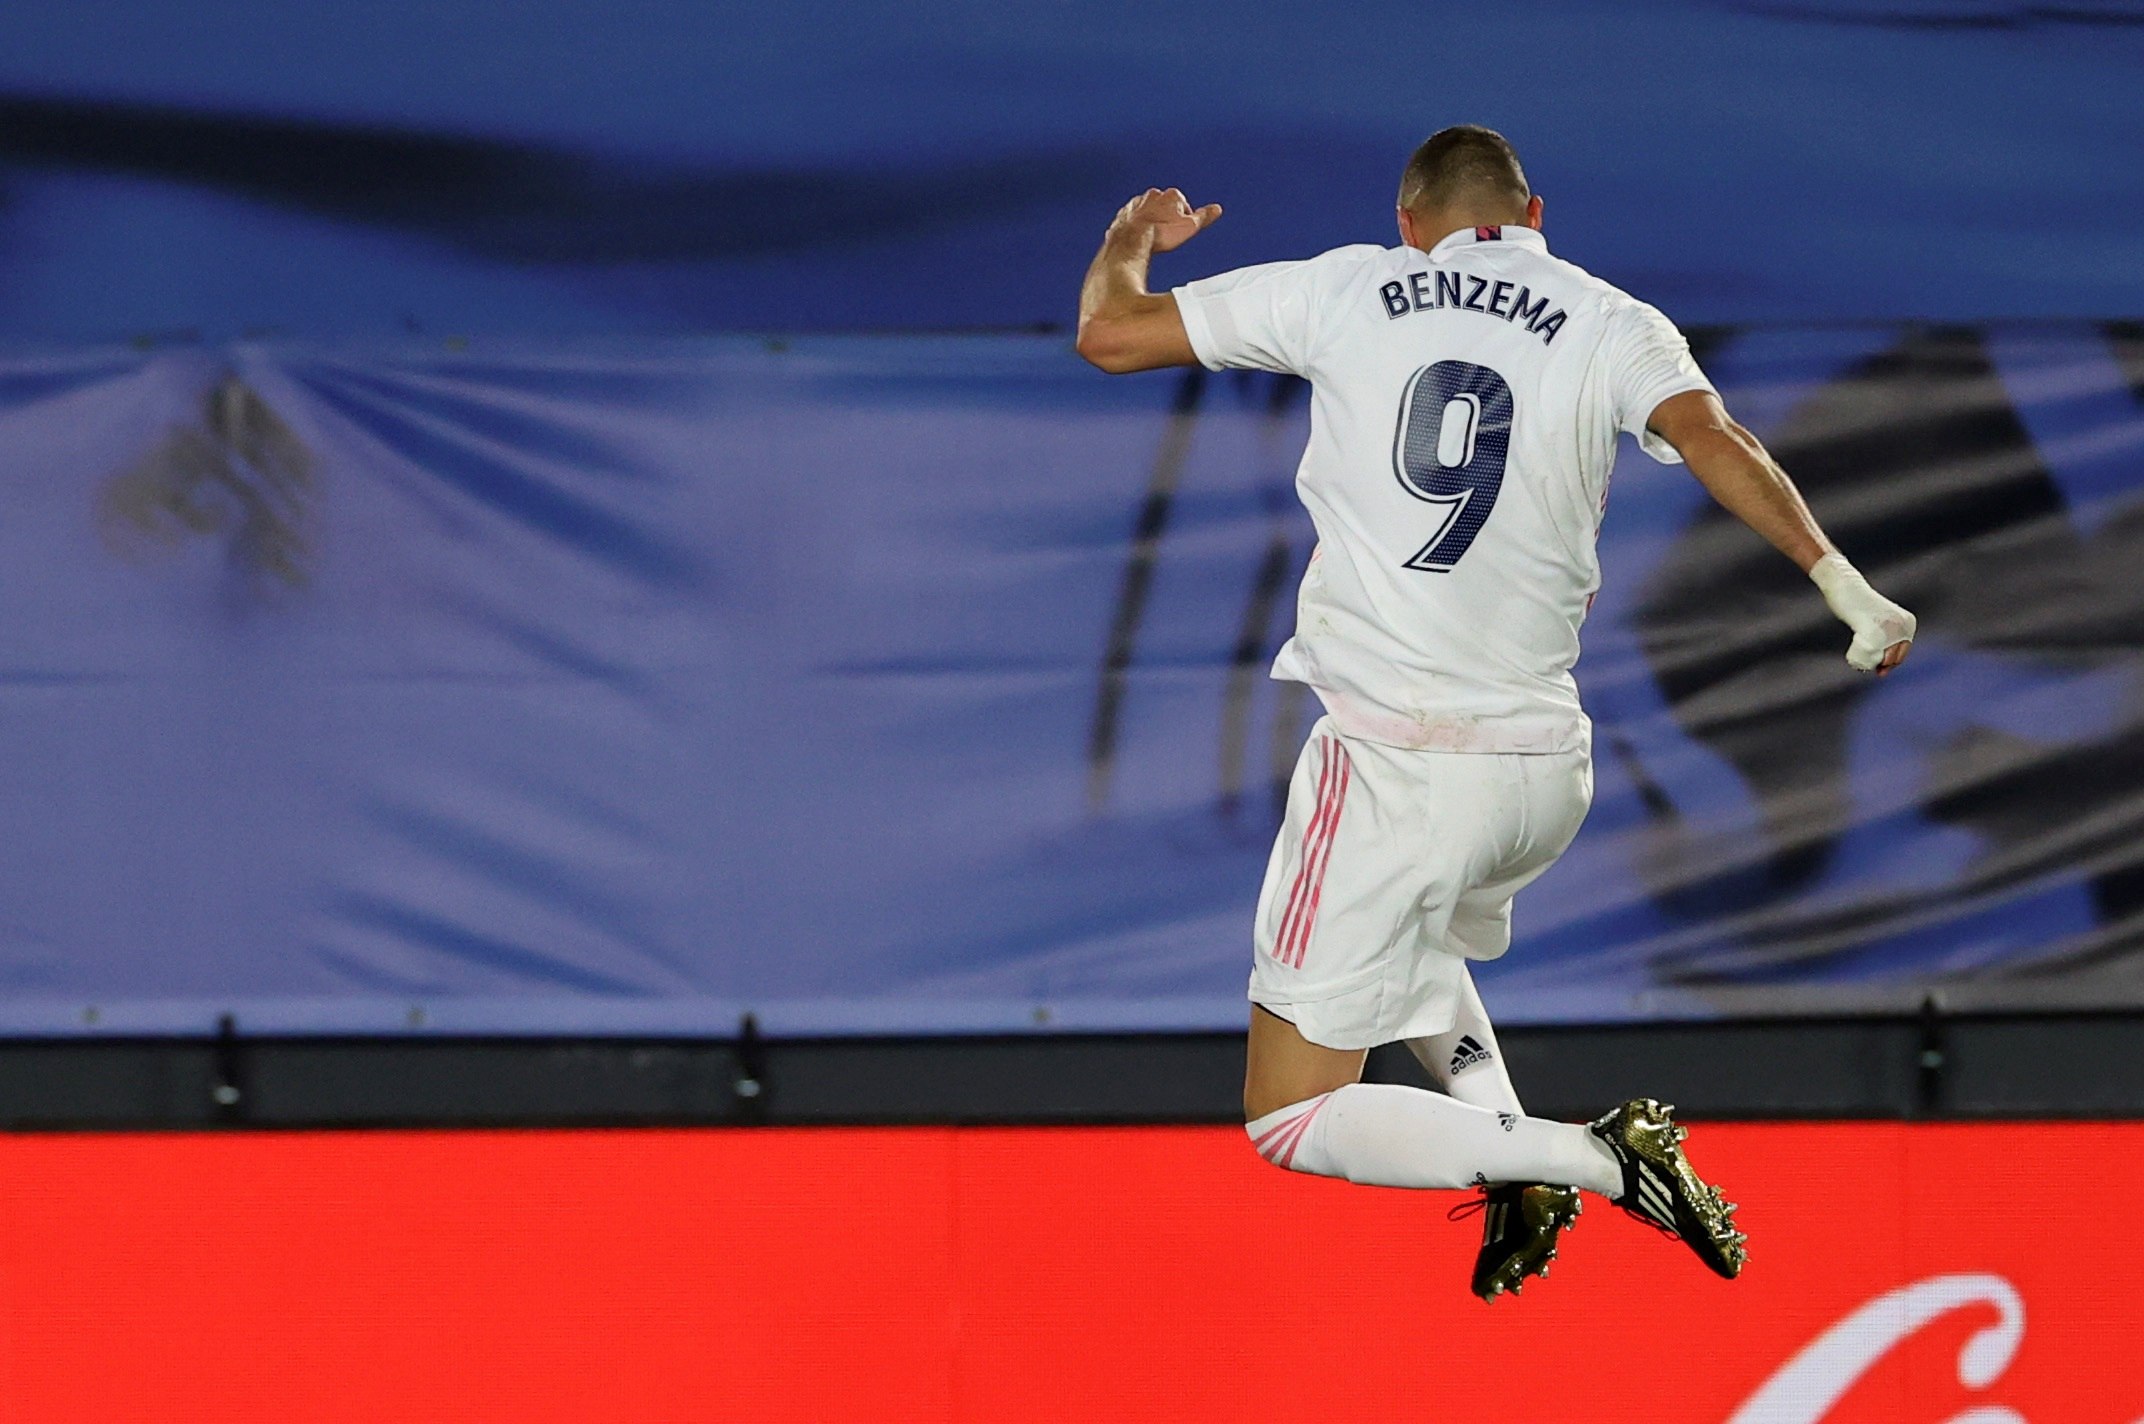 El delantero francés del Real Madrid, Karim Benzema, celebra el tercer gol -doblete- del equipo blanco. Sigue en racha positiva el francés. Foto Prensa Libre: EFE.